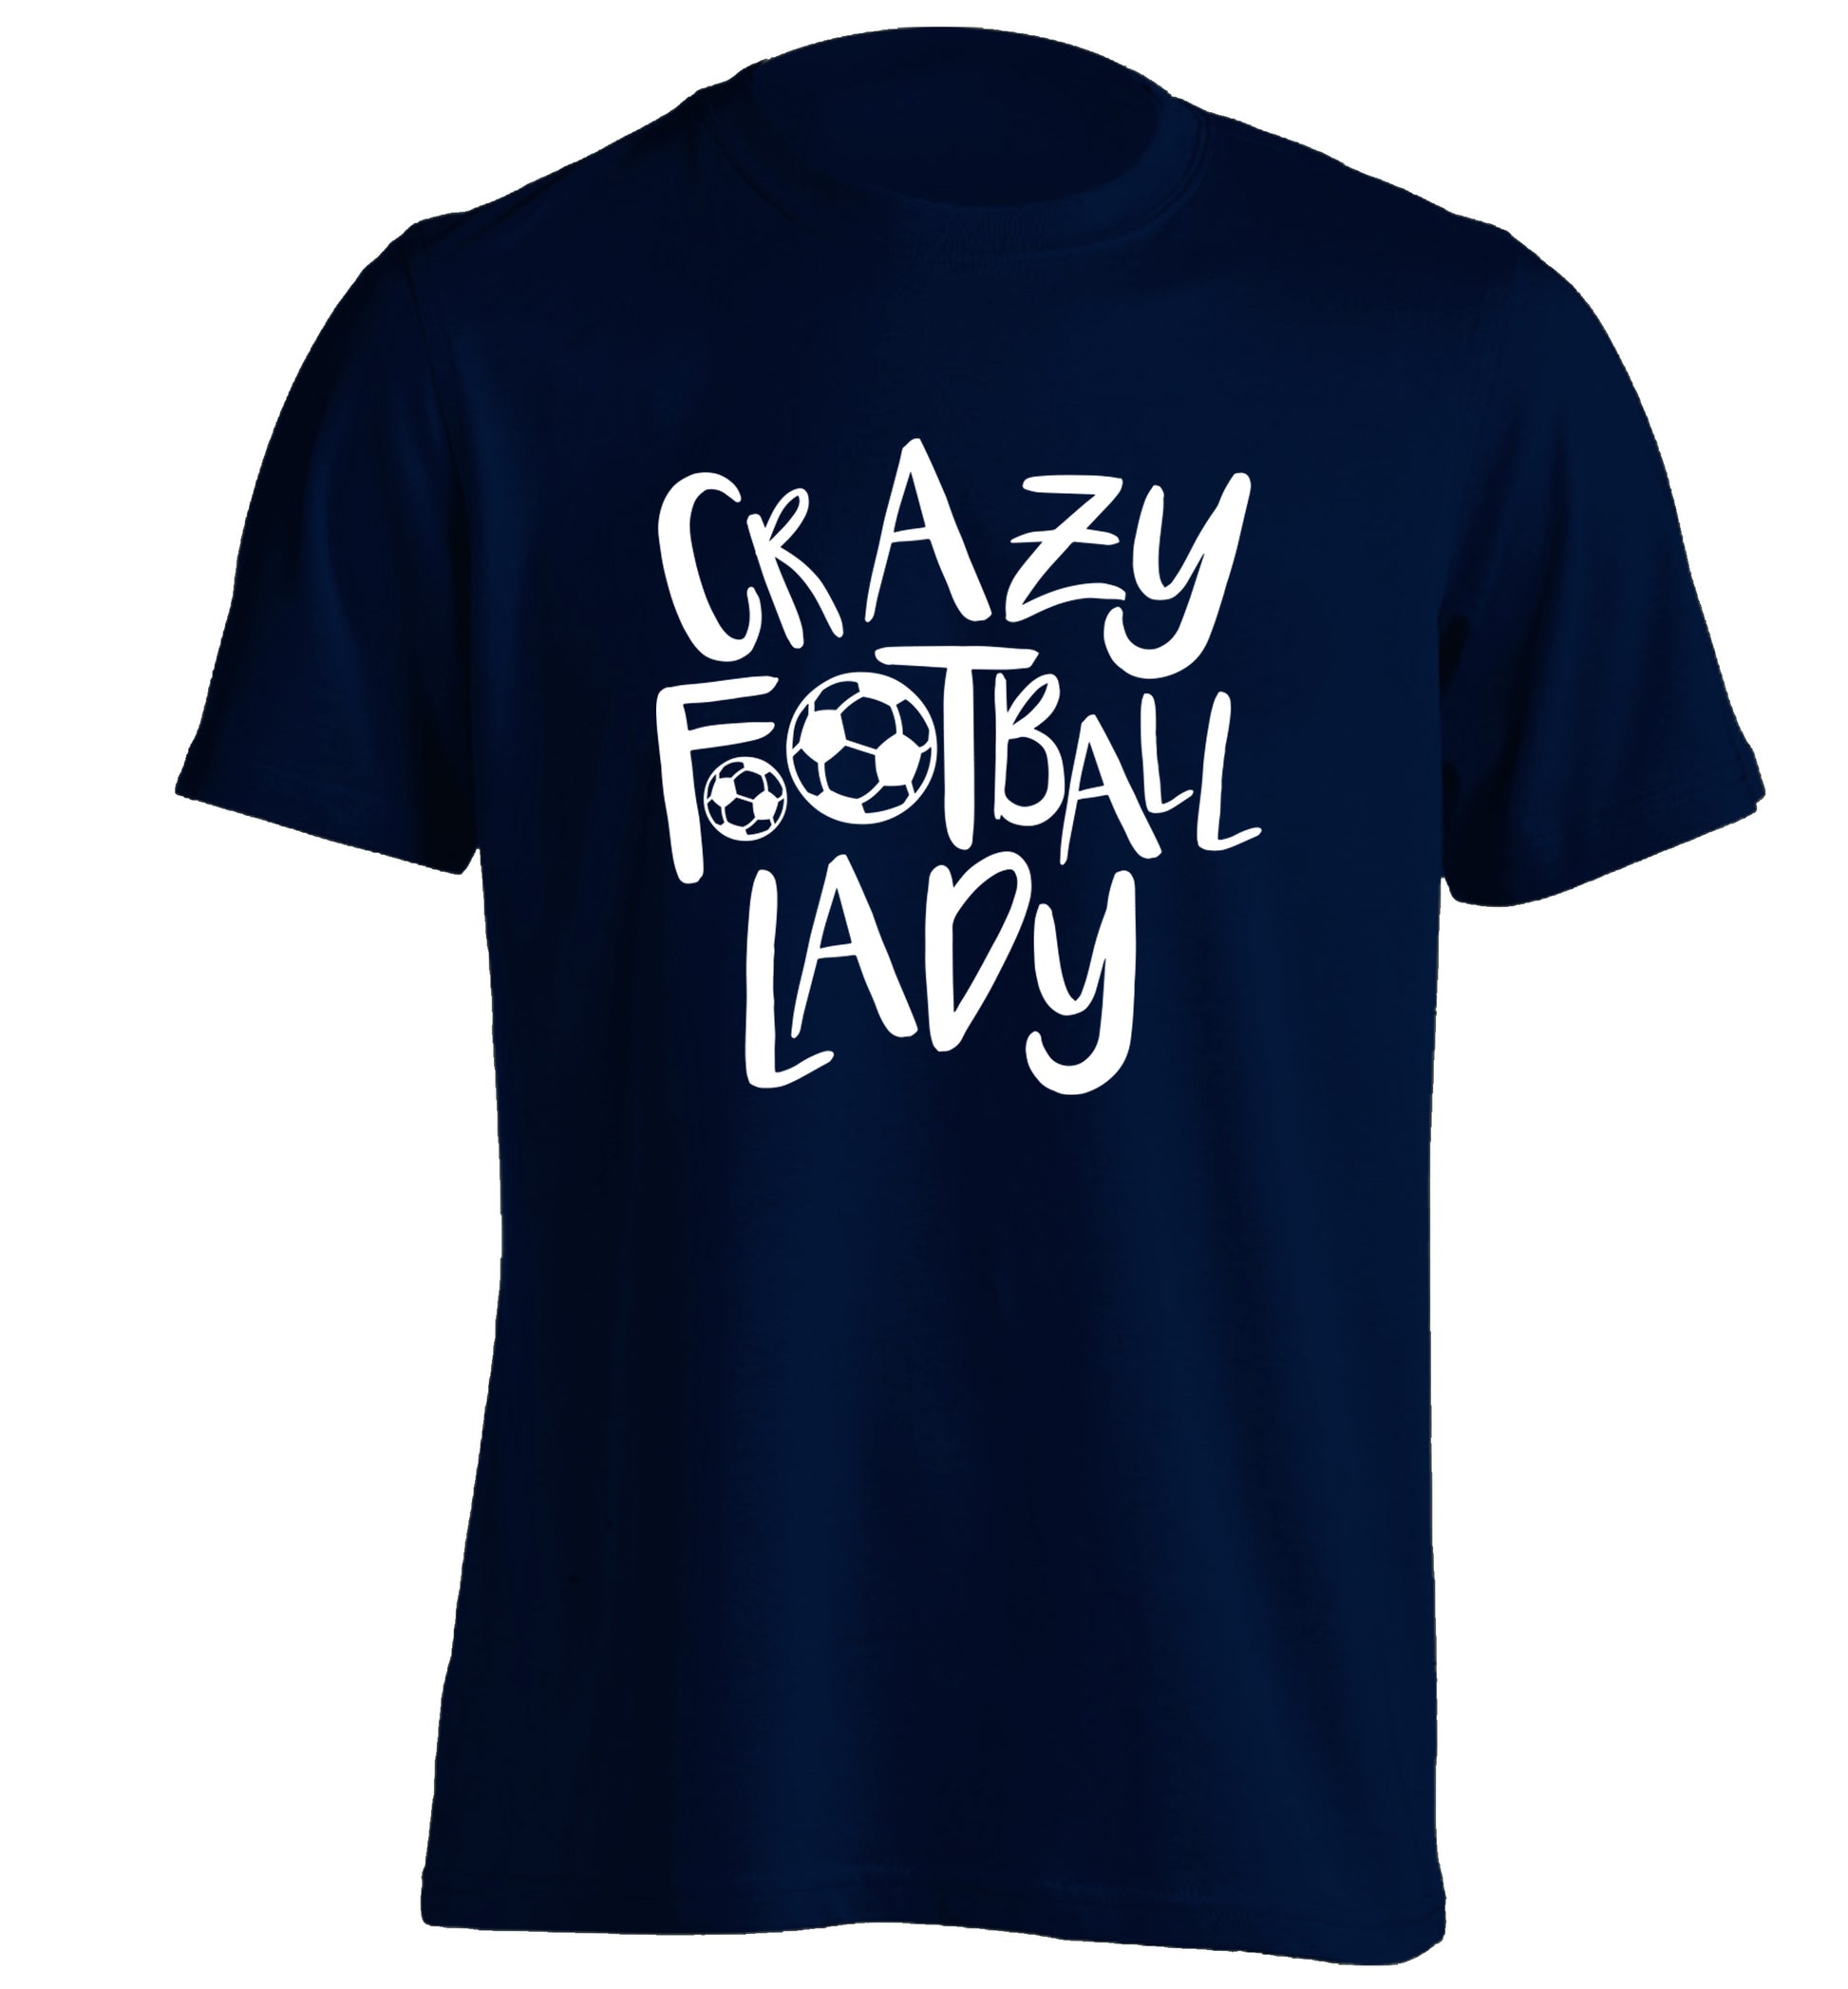 Crazy football lady adults unisexnavy Tshirt 2XL